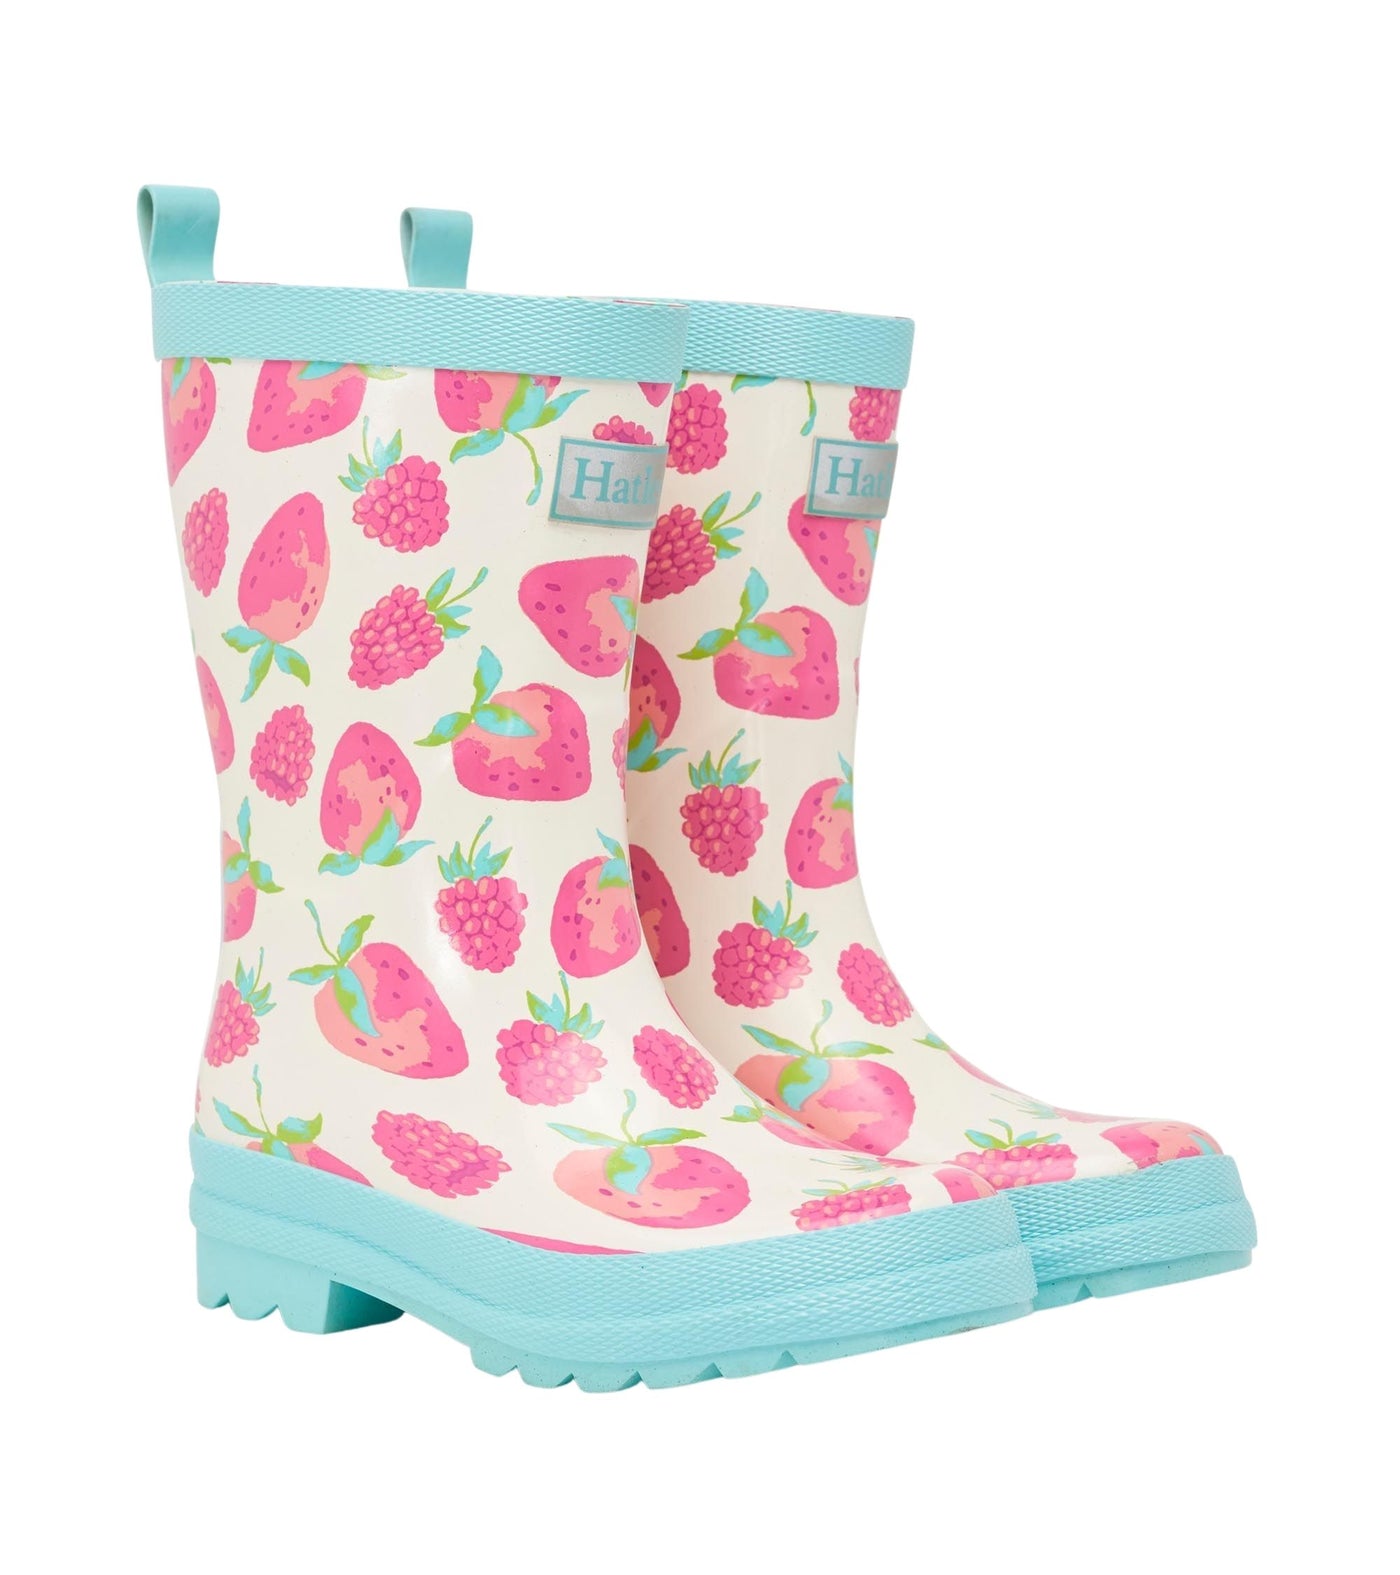 Hatley Kids Shiny Rain Boots - Delicious Berries